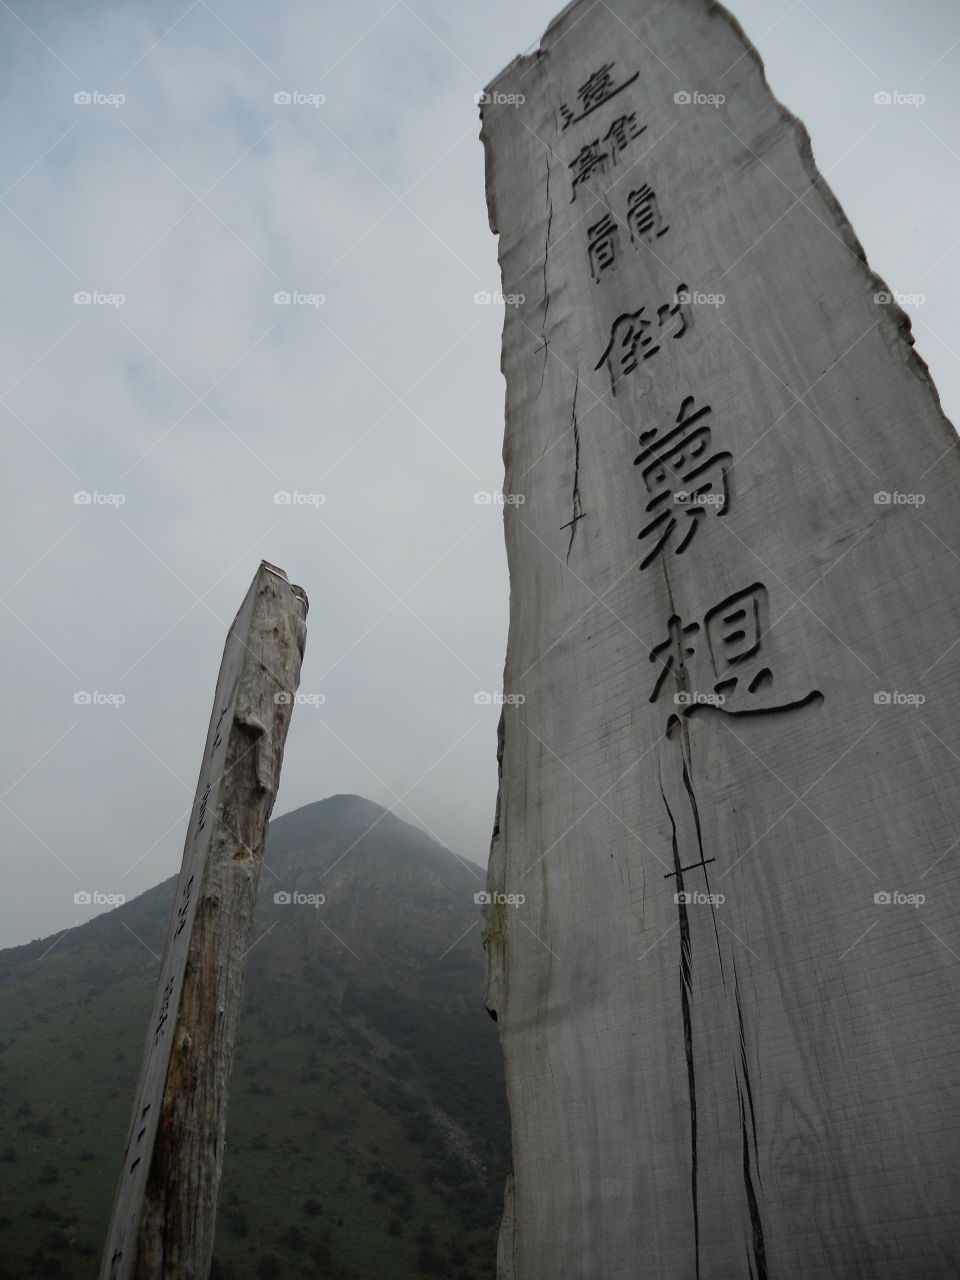 The Heart Sutra carved on wooden posts surrounding the "Big Buddha" (Tian Tan Buddha)  on Lantau  Hong Kong